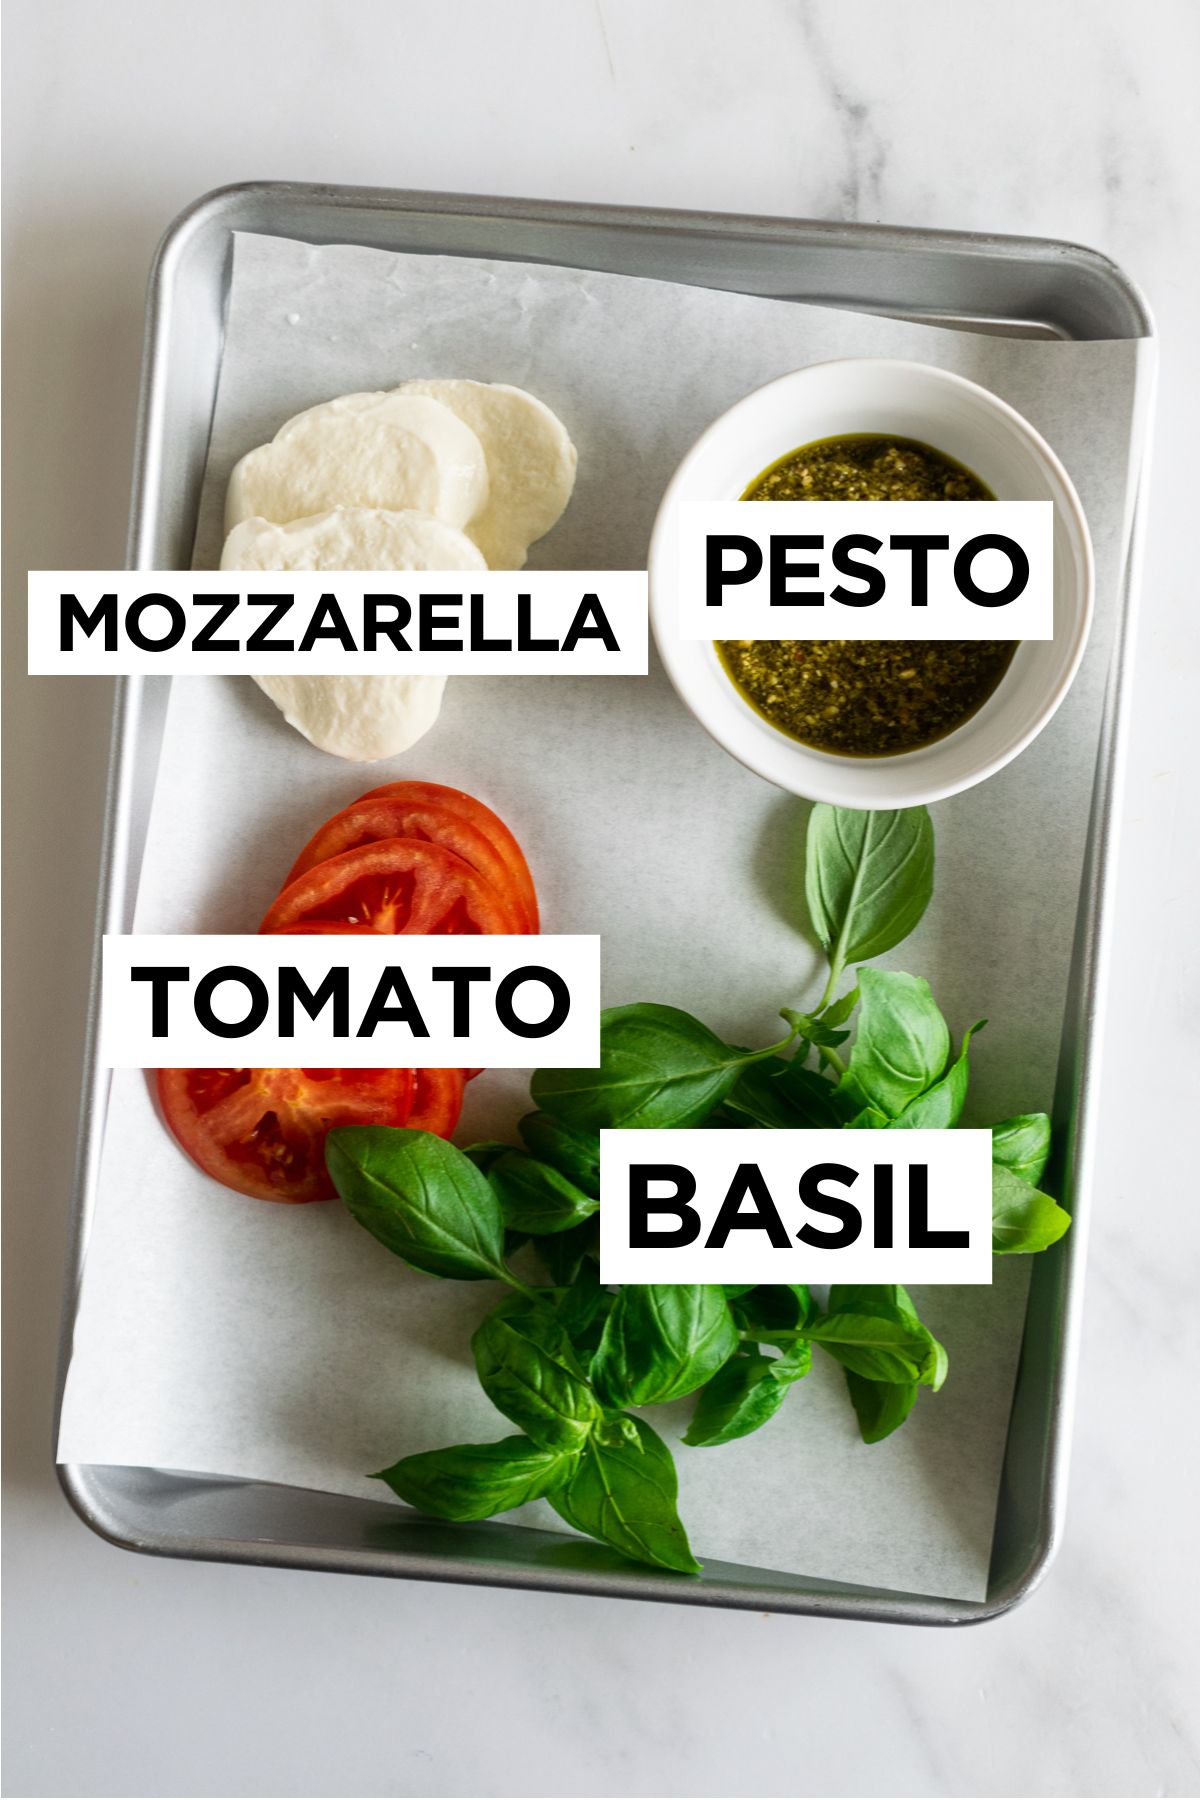 caprese burger toppings such as basil, tomatoes, mozzarella and pesto.